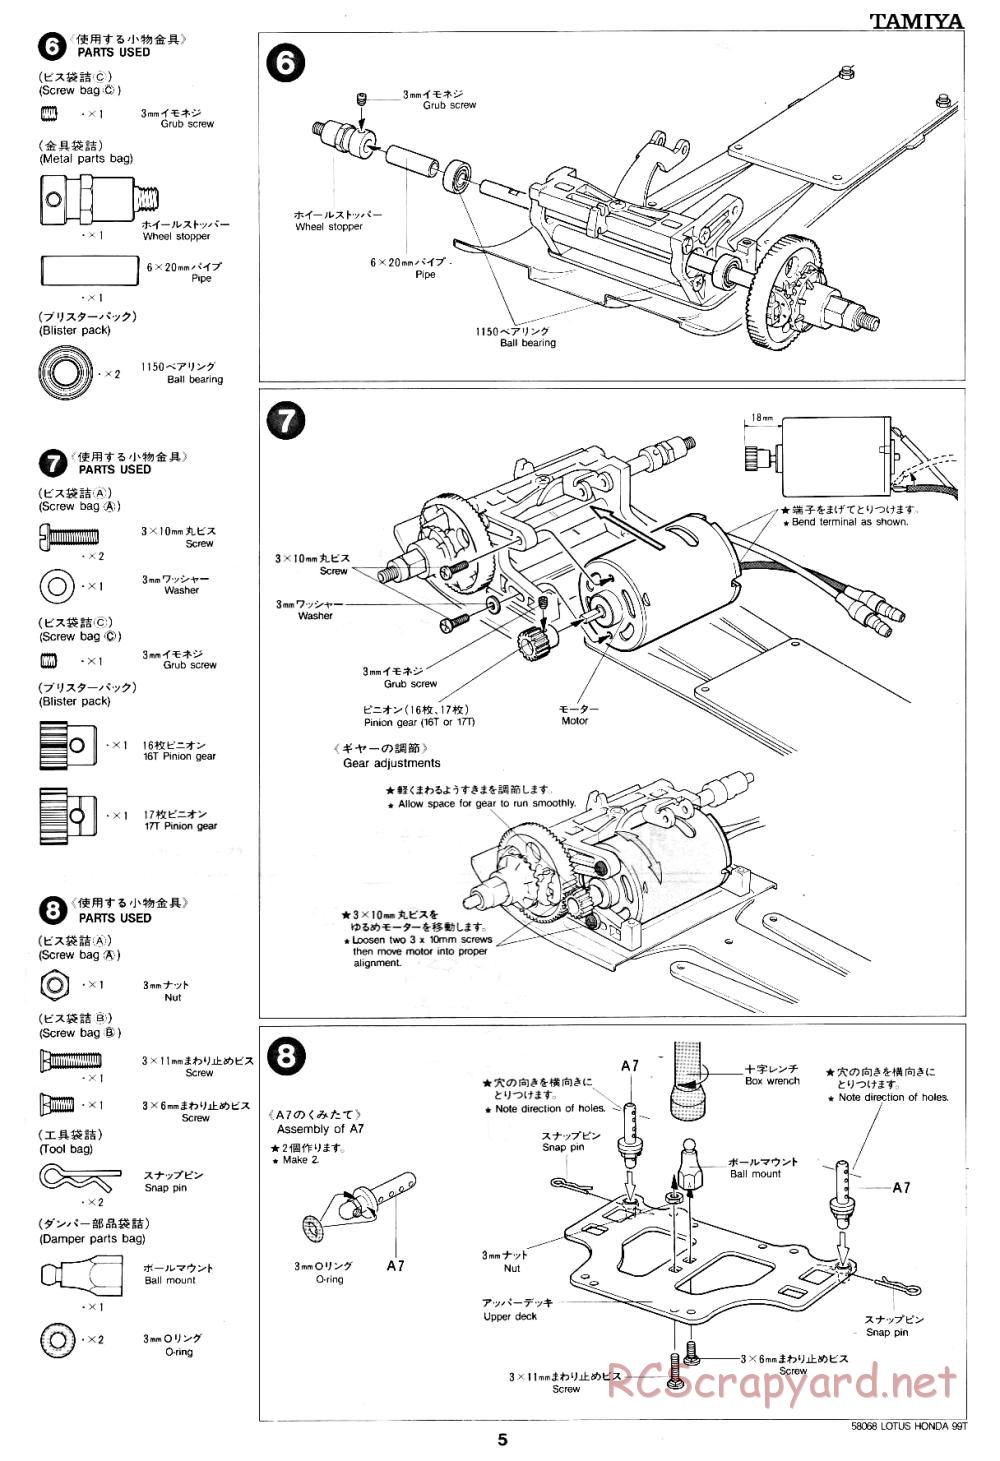 Tamiya - Lotus Honda 99T - 58068 - Manual - Page 5